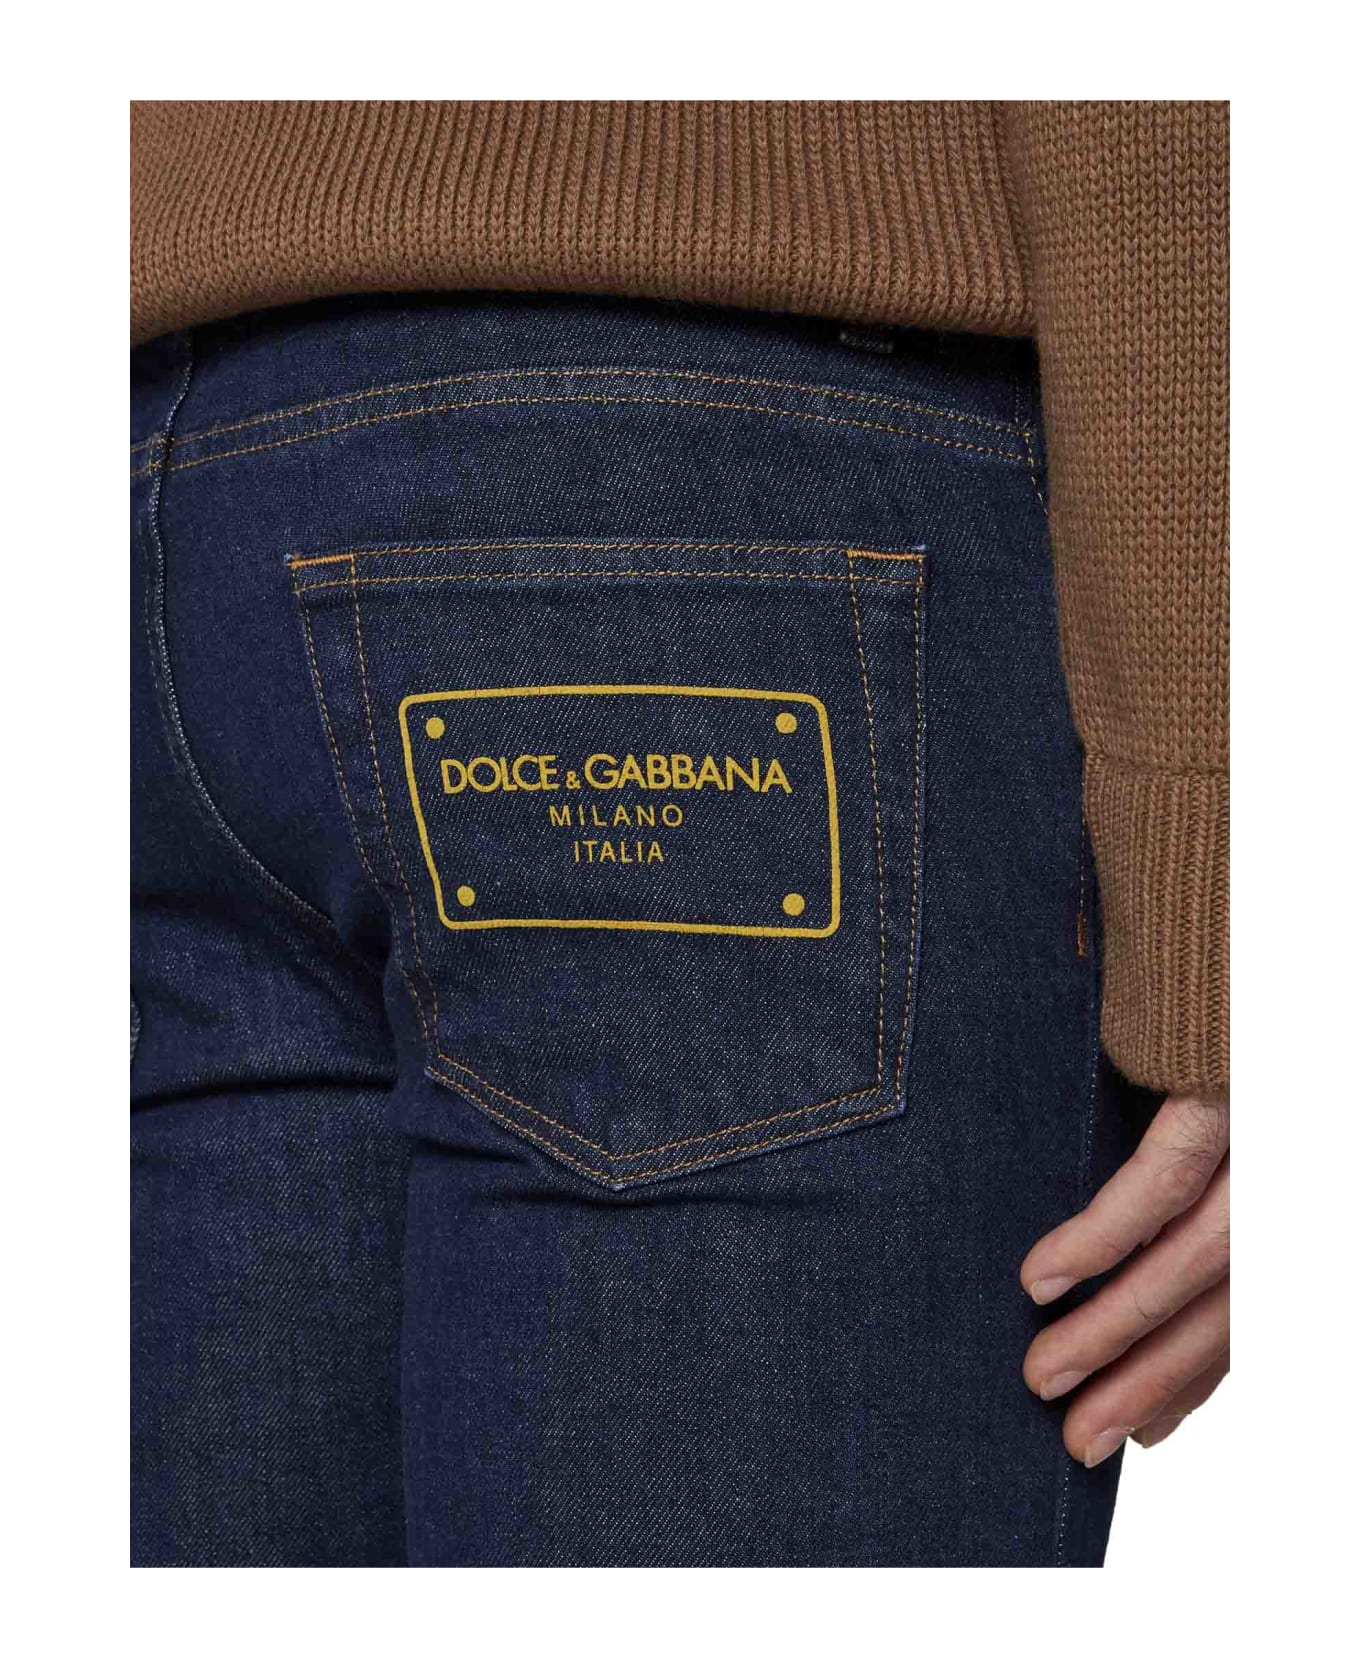 Dolce & Gabbana Skinny Fit Trouser - Variante abbinata